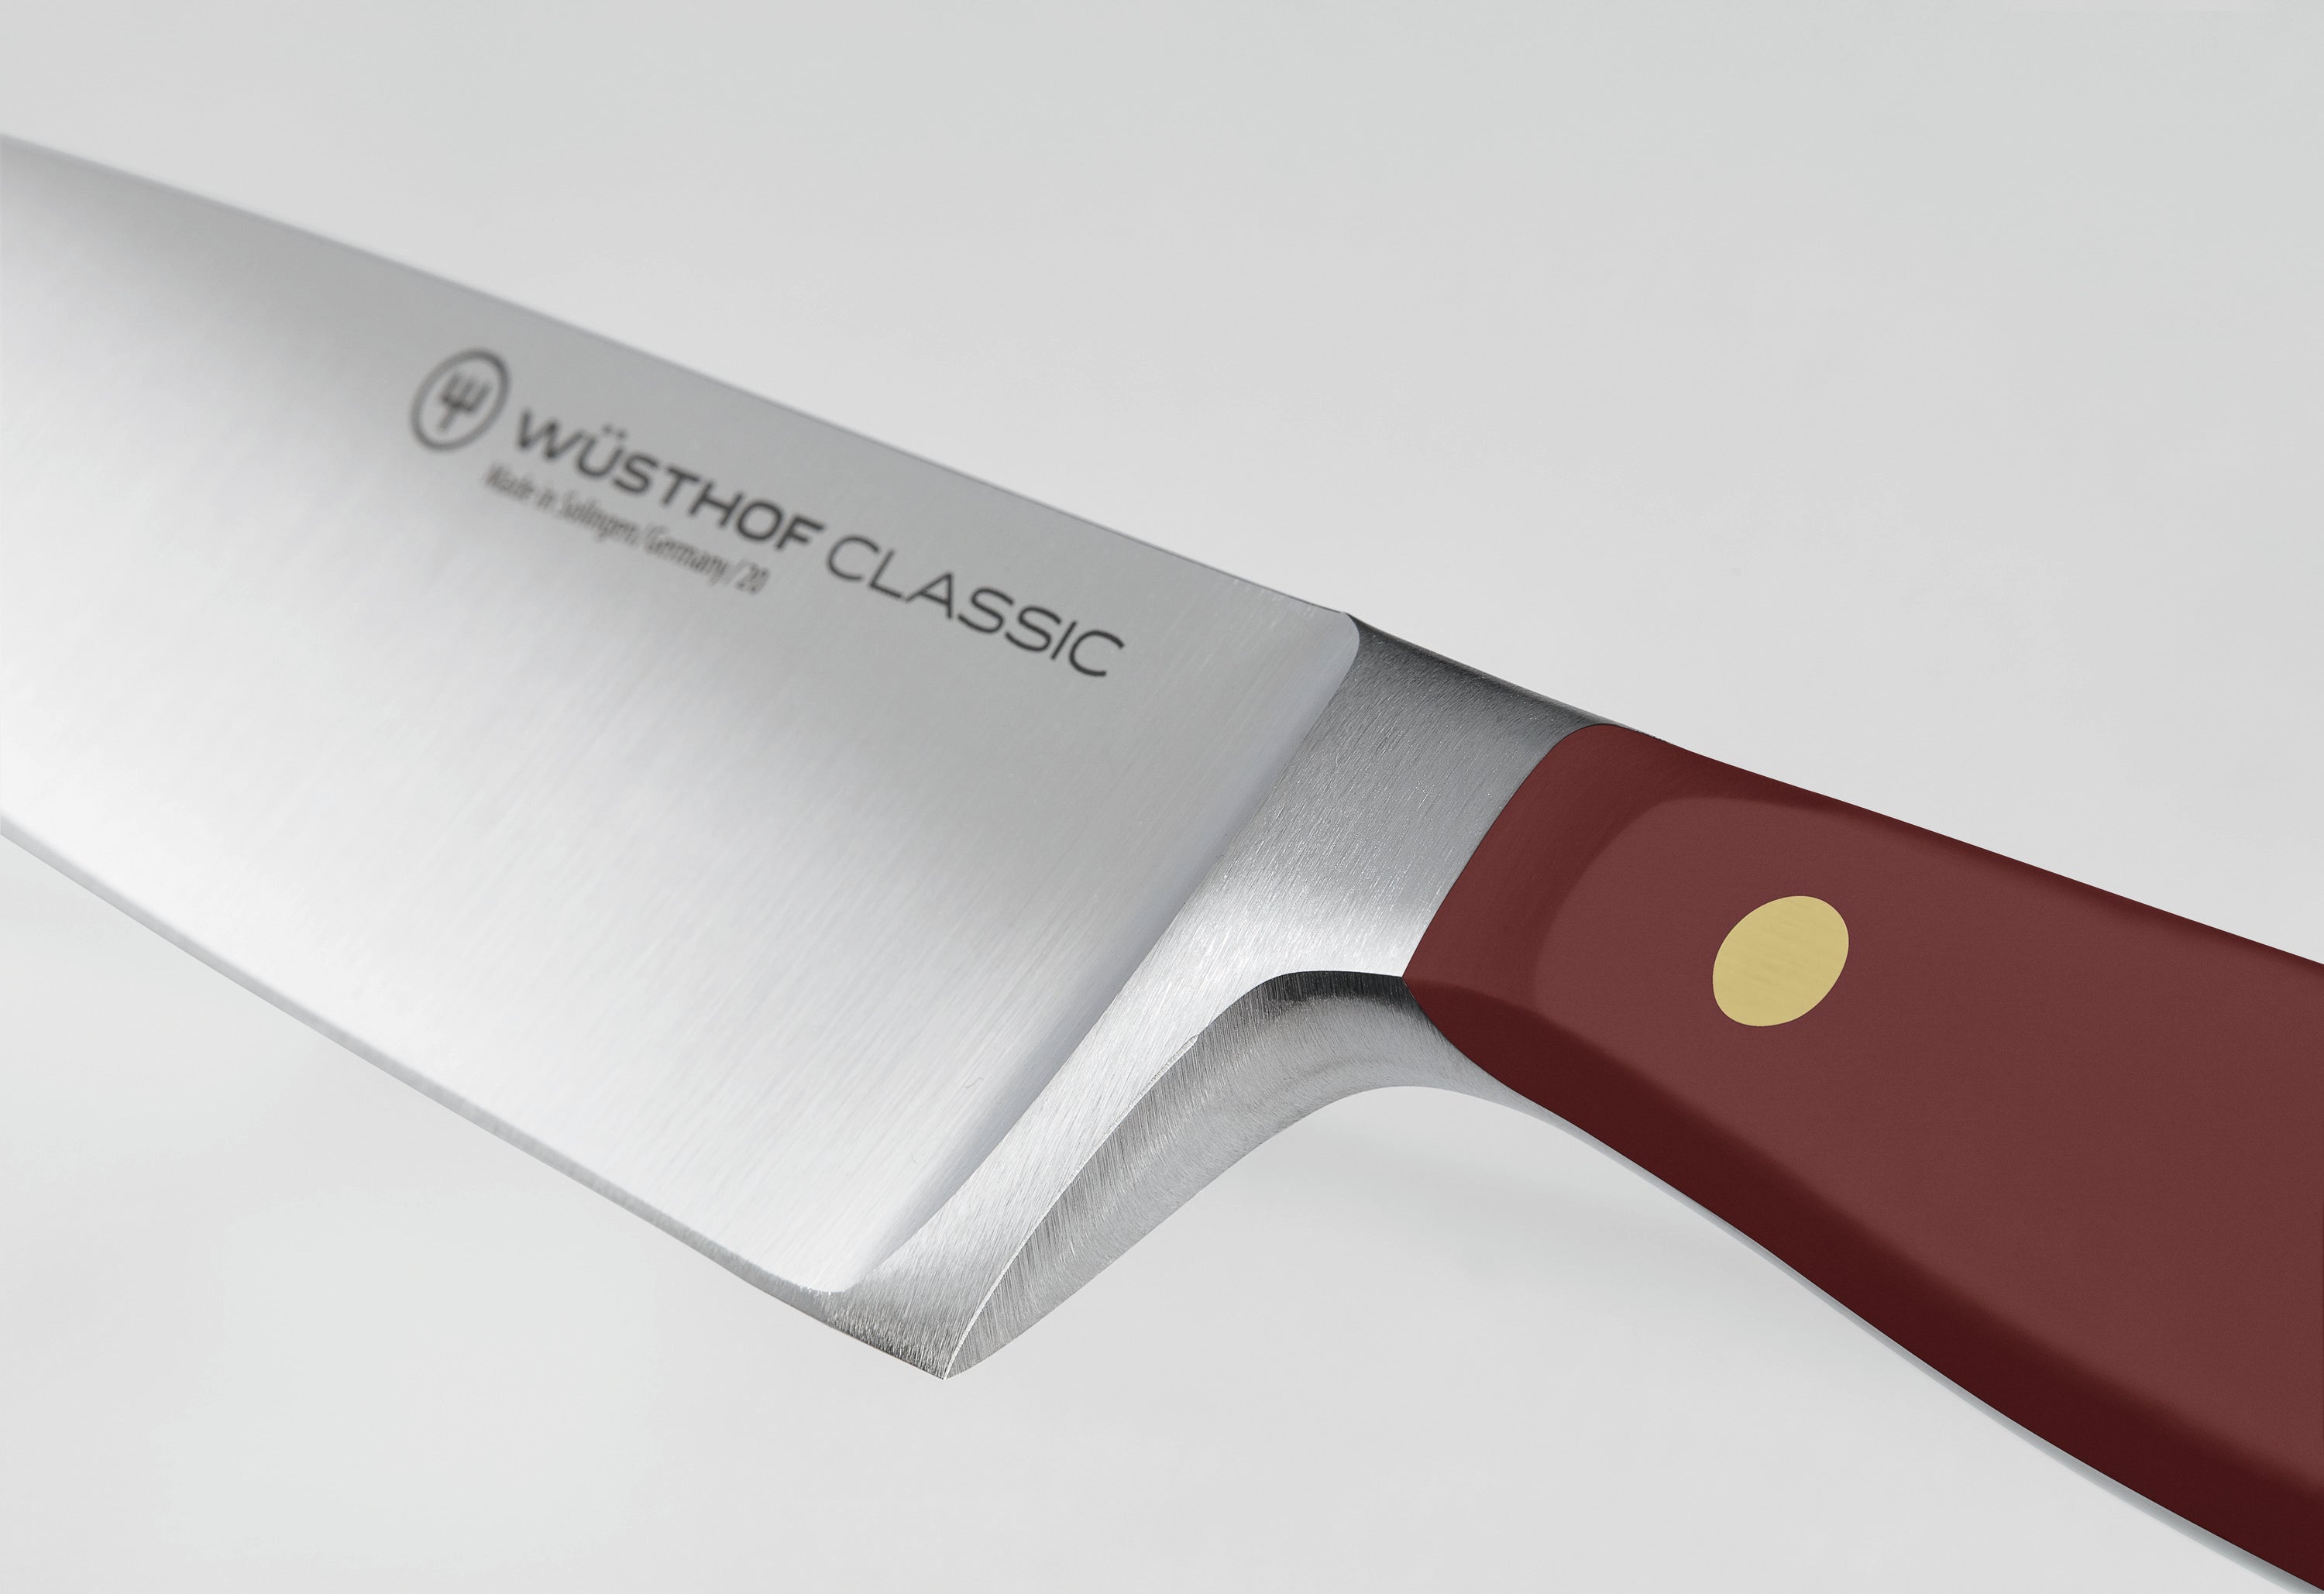 Wusthof Classic Colour Tasty Sumac Utility Knife 16cm 1061704516W